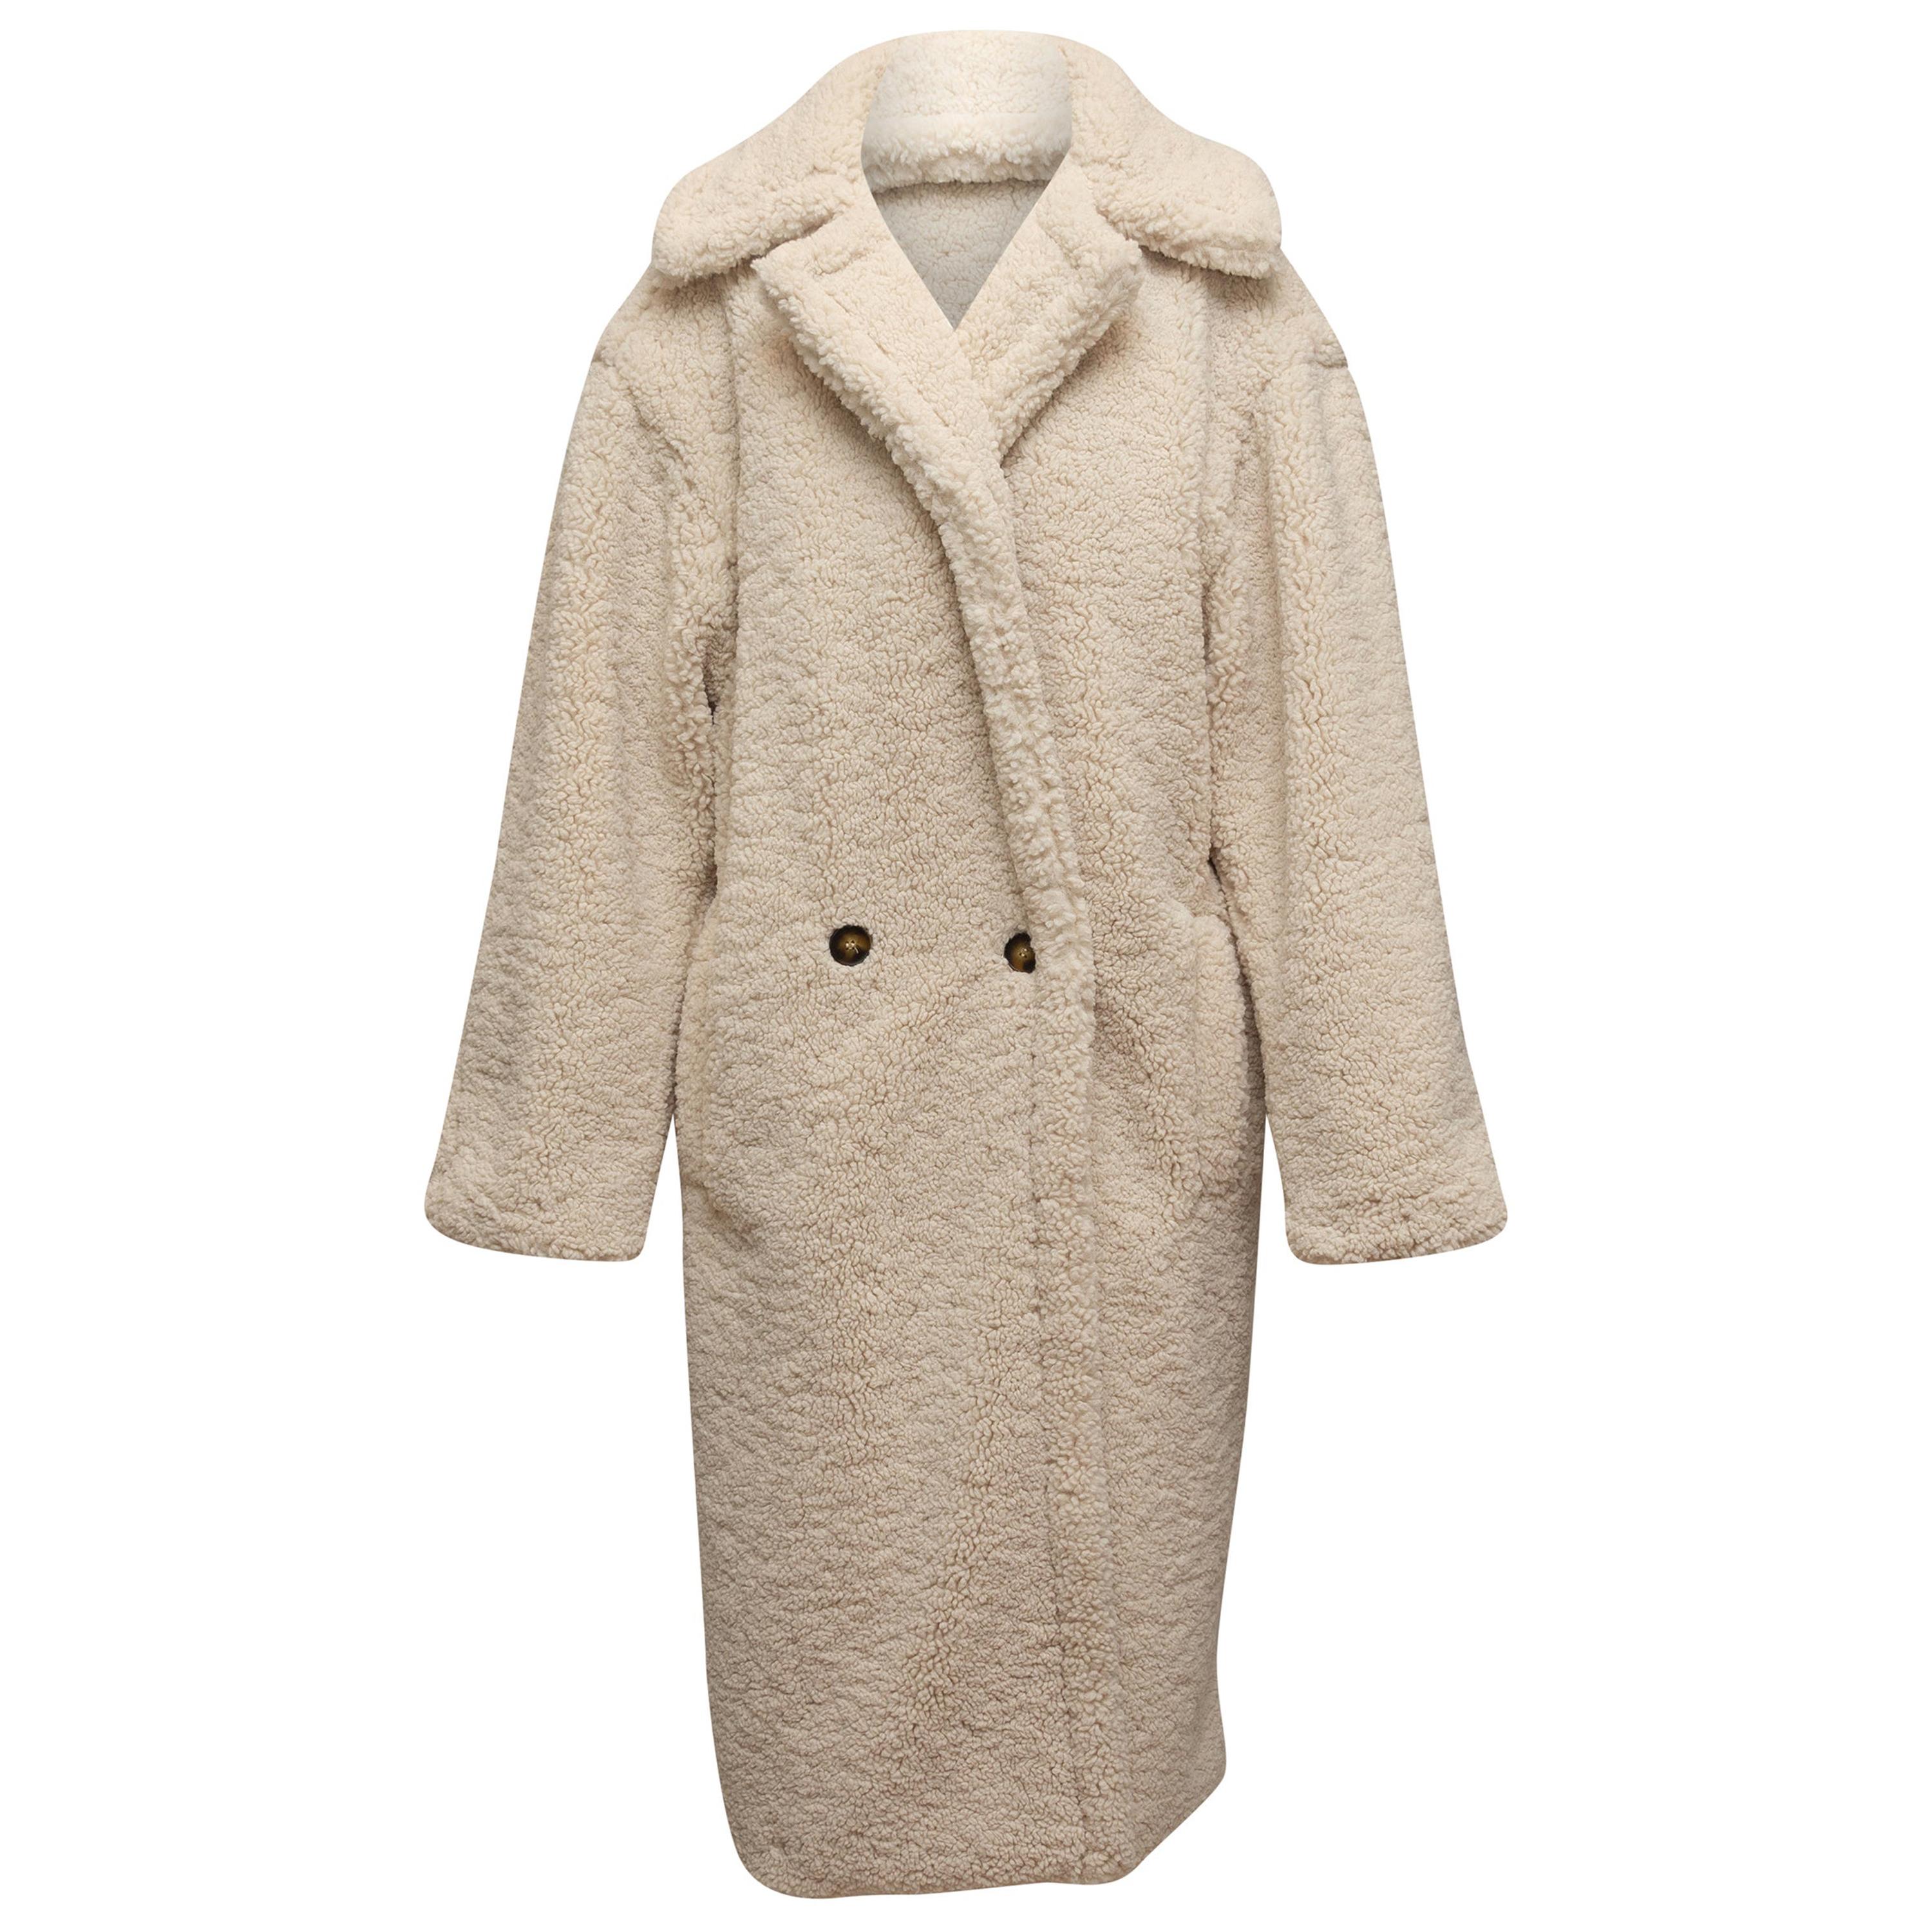 Apparis White Fleece Double-Breasted Long Coat